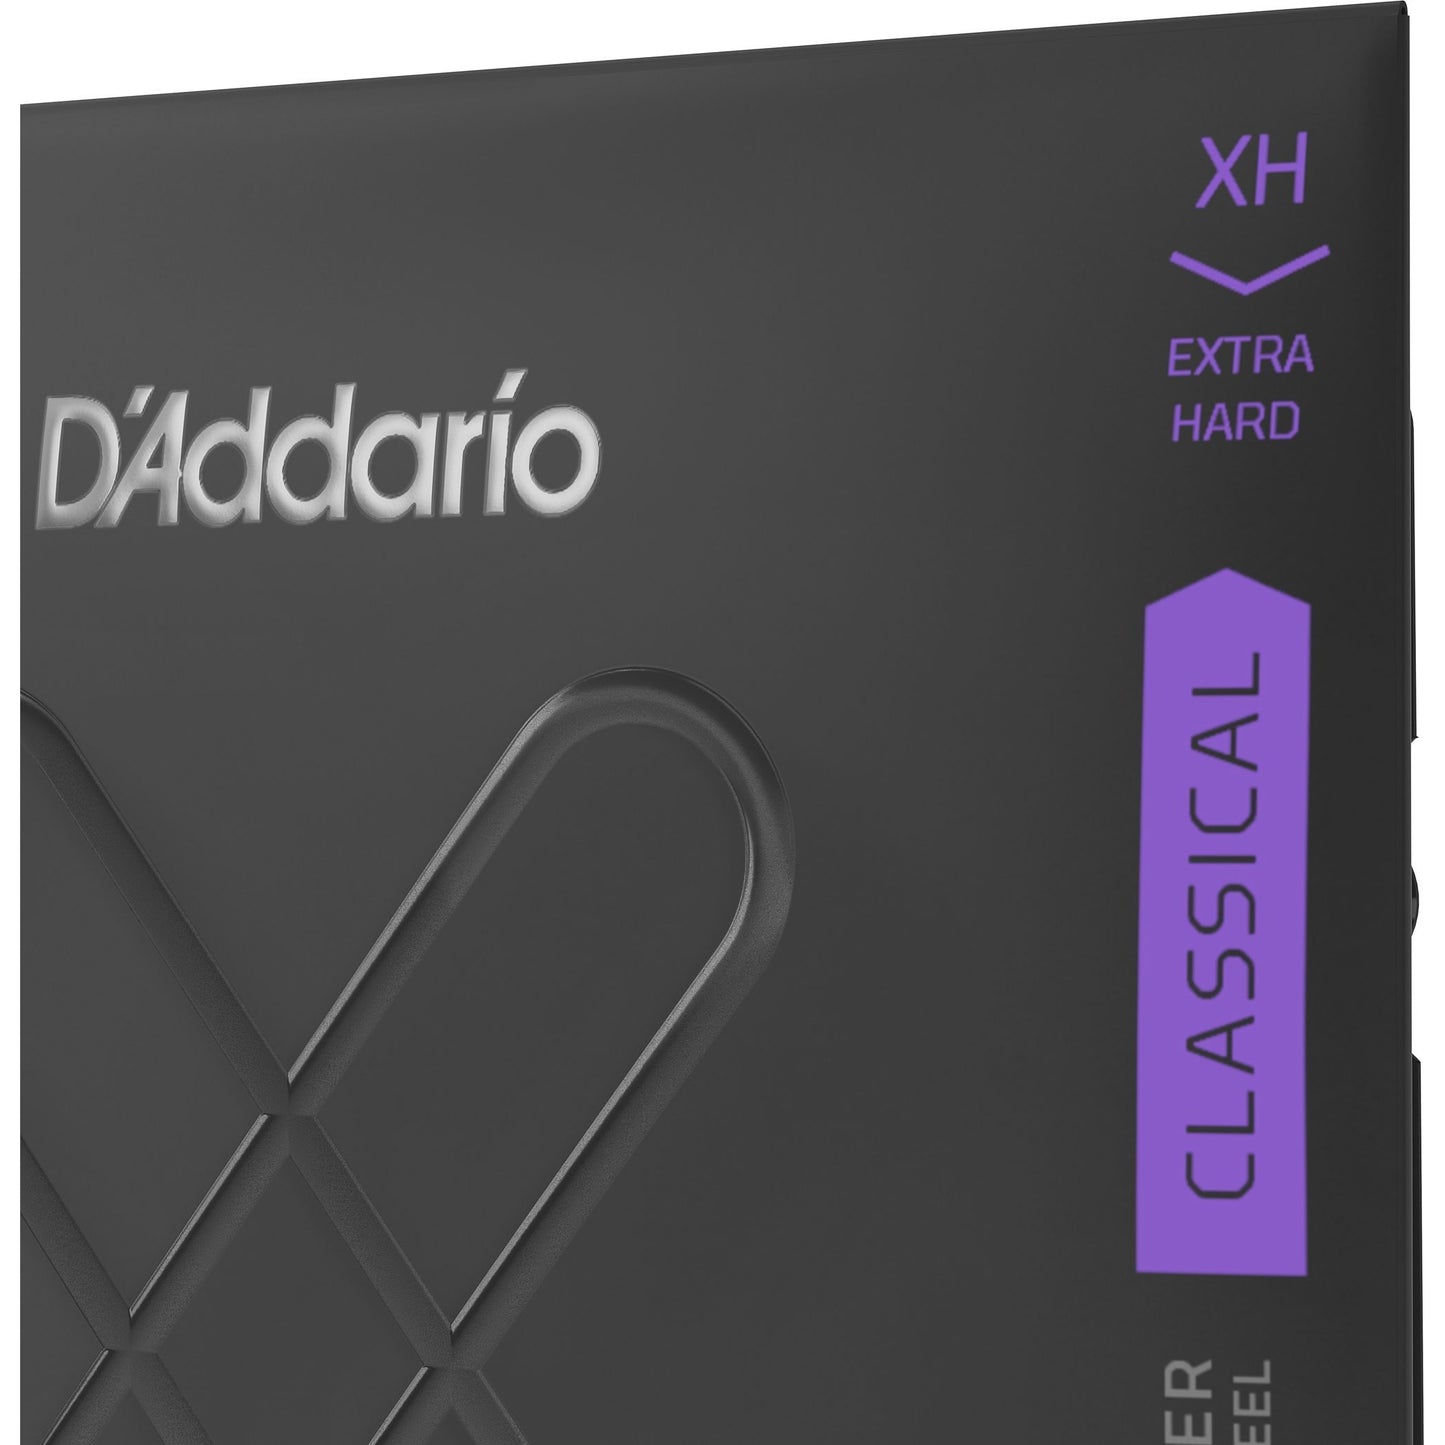 D'Addario XTC XT Classical Guitar Strings, Extra Hard Tension